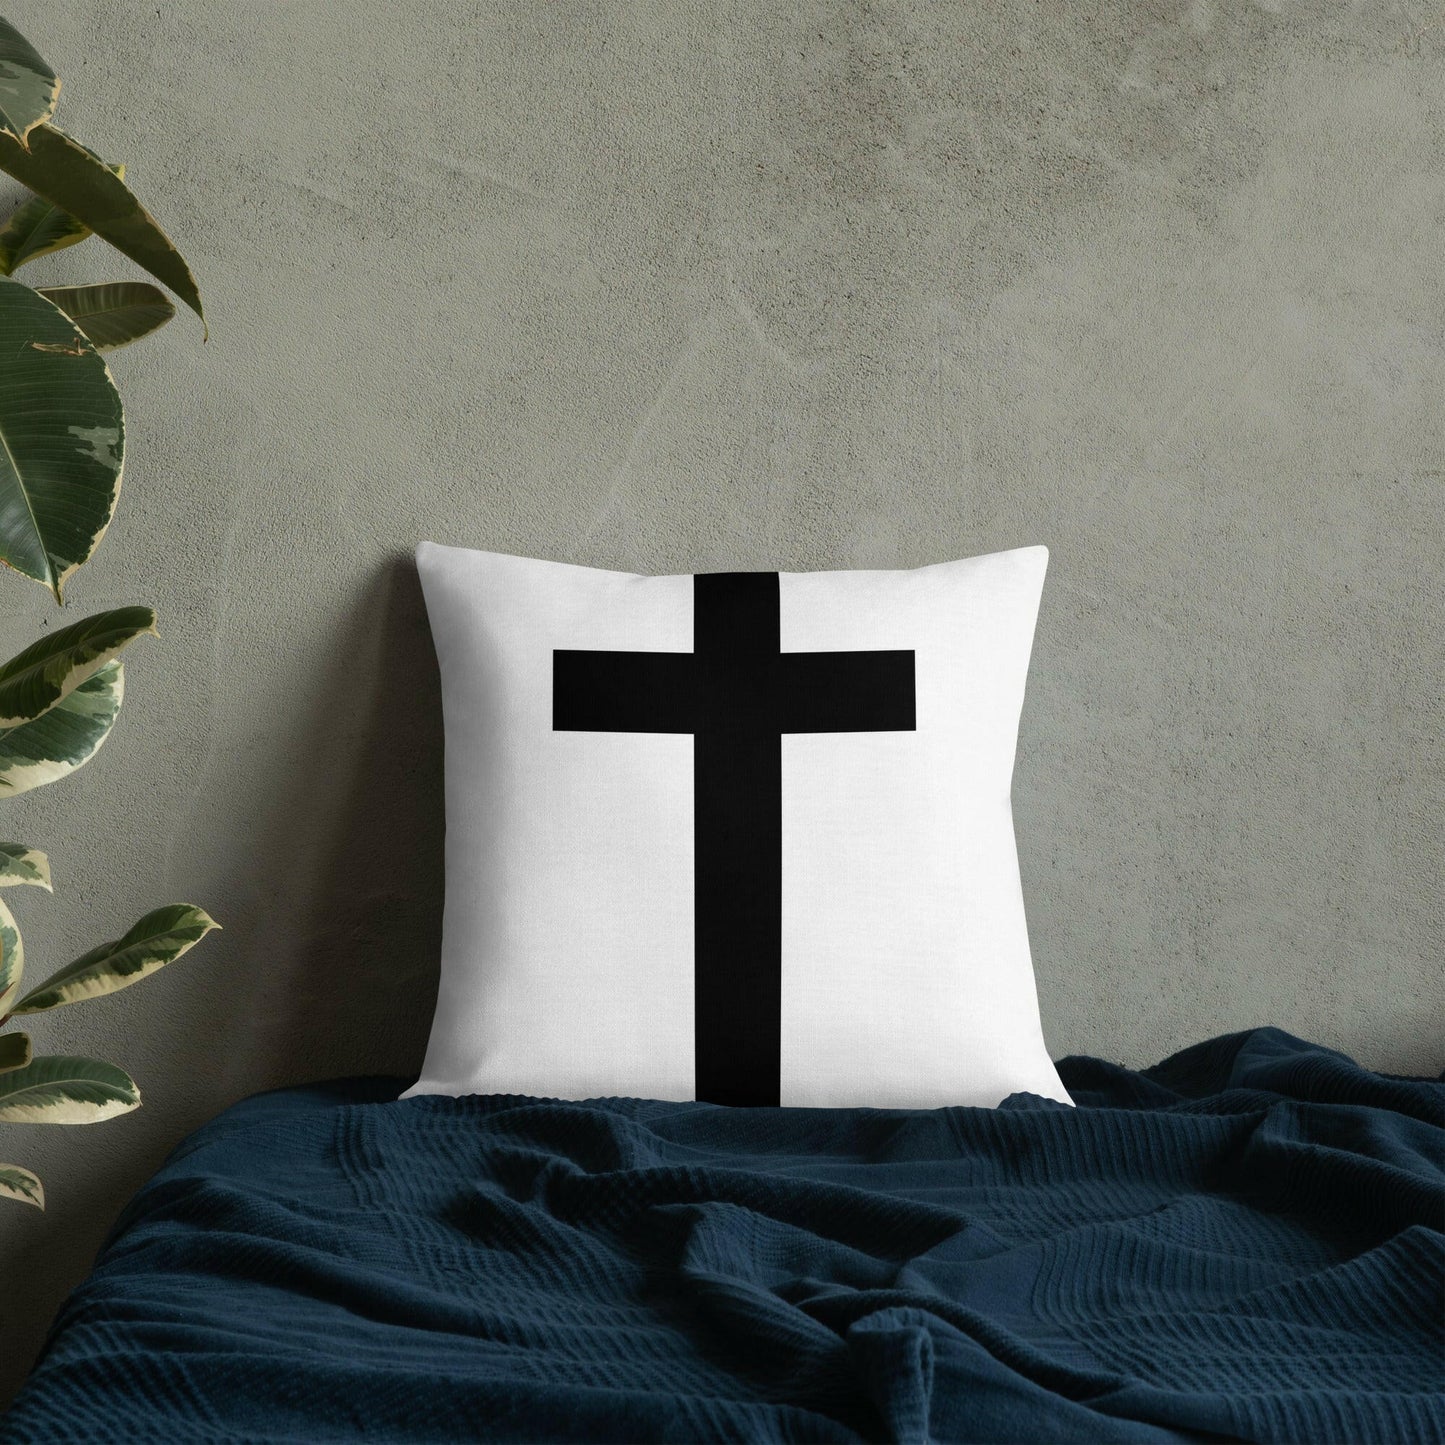 Psalm 23:6 - Premium Pillow